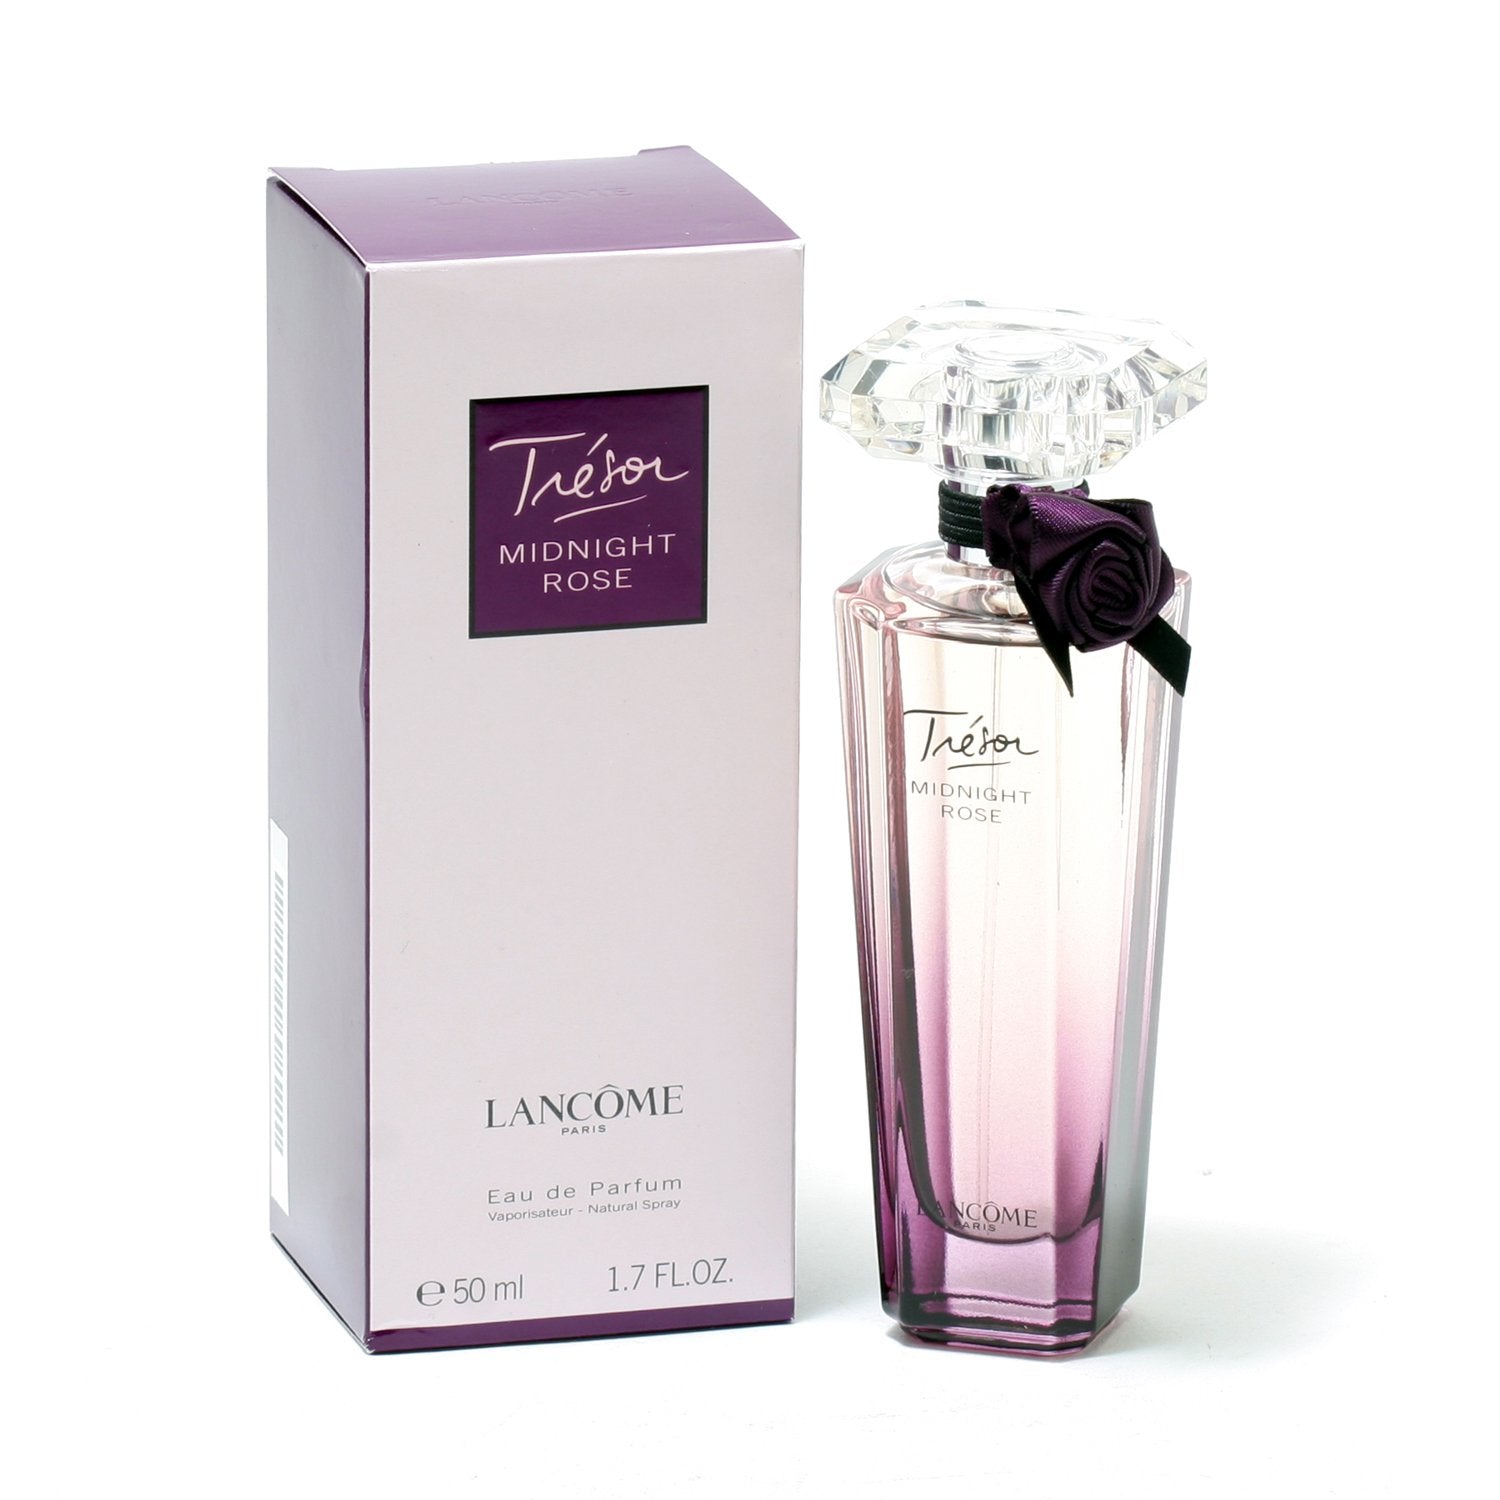 Lancome Tresor Midnight Rose Eau De Parfum Spray - 1 fl oz bottle